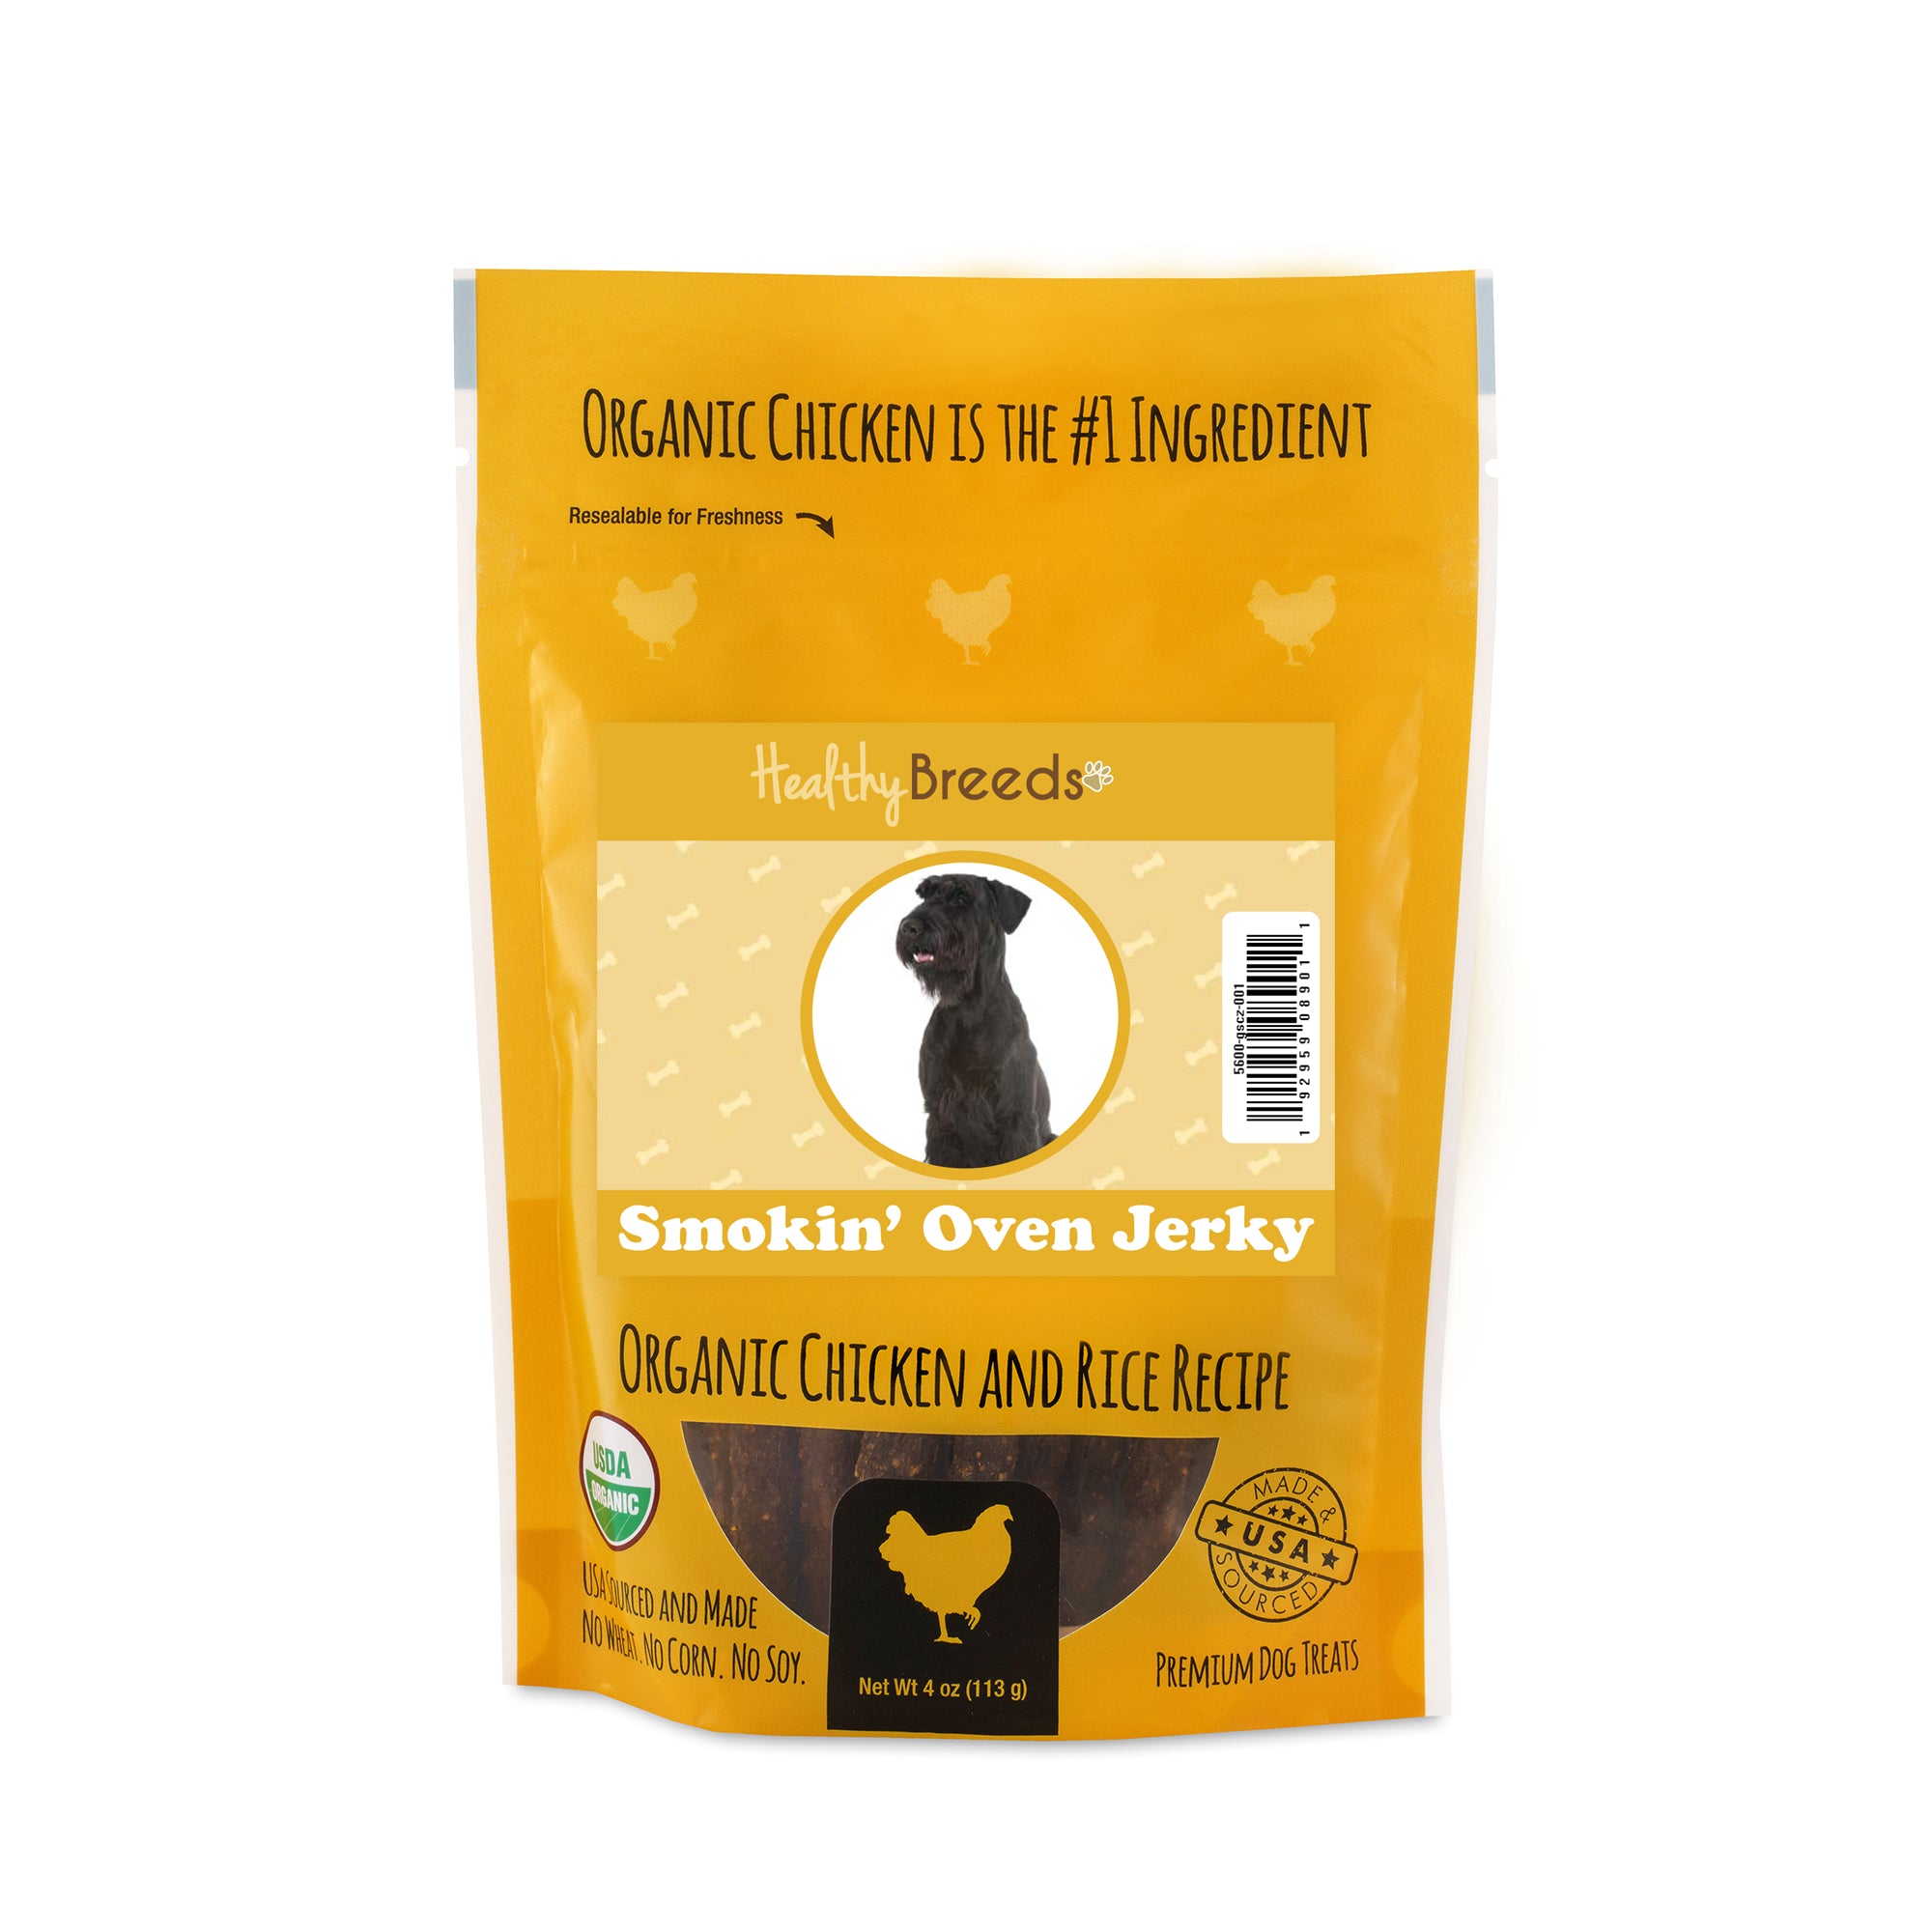 Giant Schnauzer Smokin' Oven Organic Chicken & Rice Recipe Jerky Dog Treats 4 oz